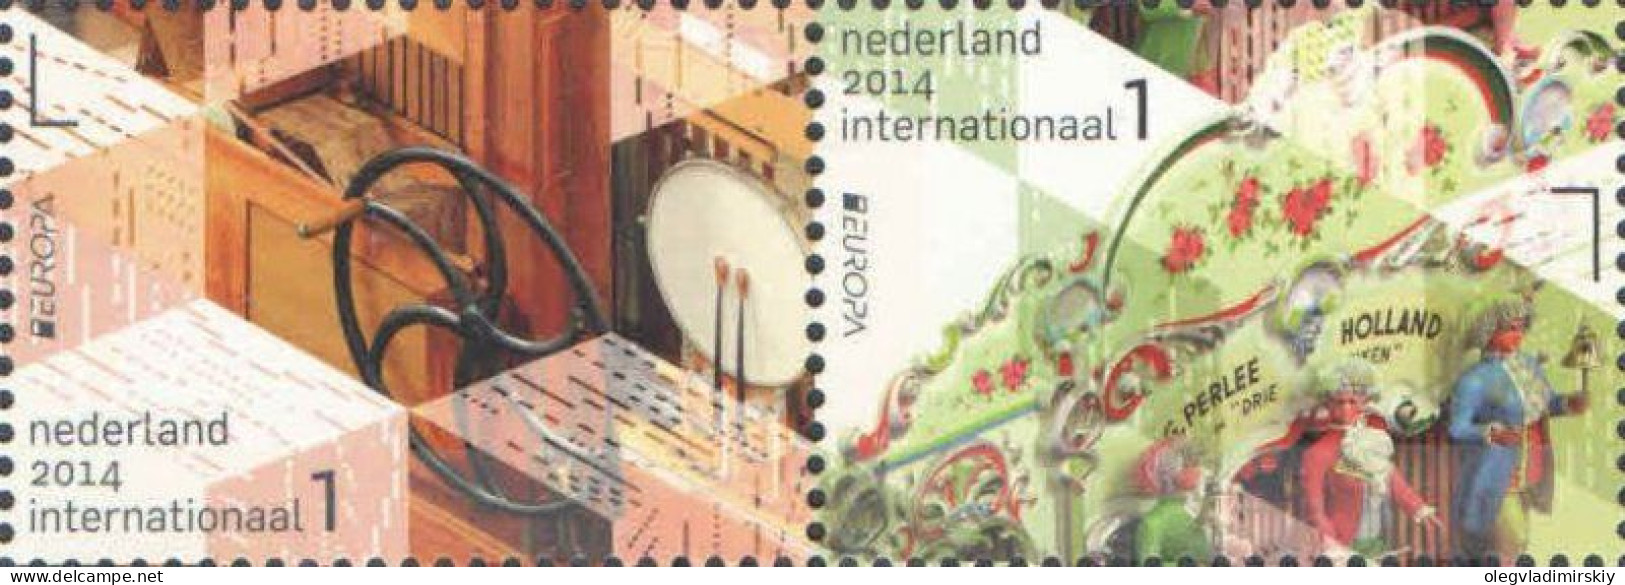 Netherlands Pays-Bas Niederlande 2014 Europa CEPT Music Instruments Set Of 2 Stamps In Strip MNH - 2014